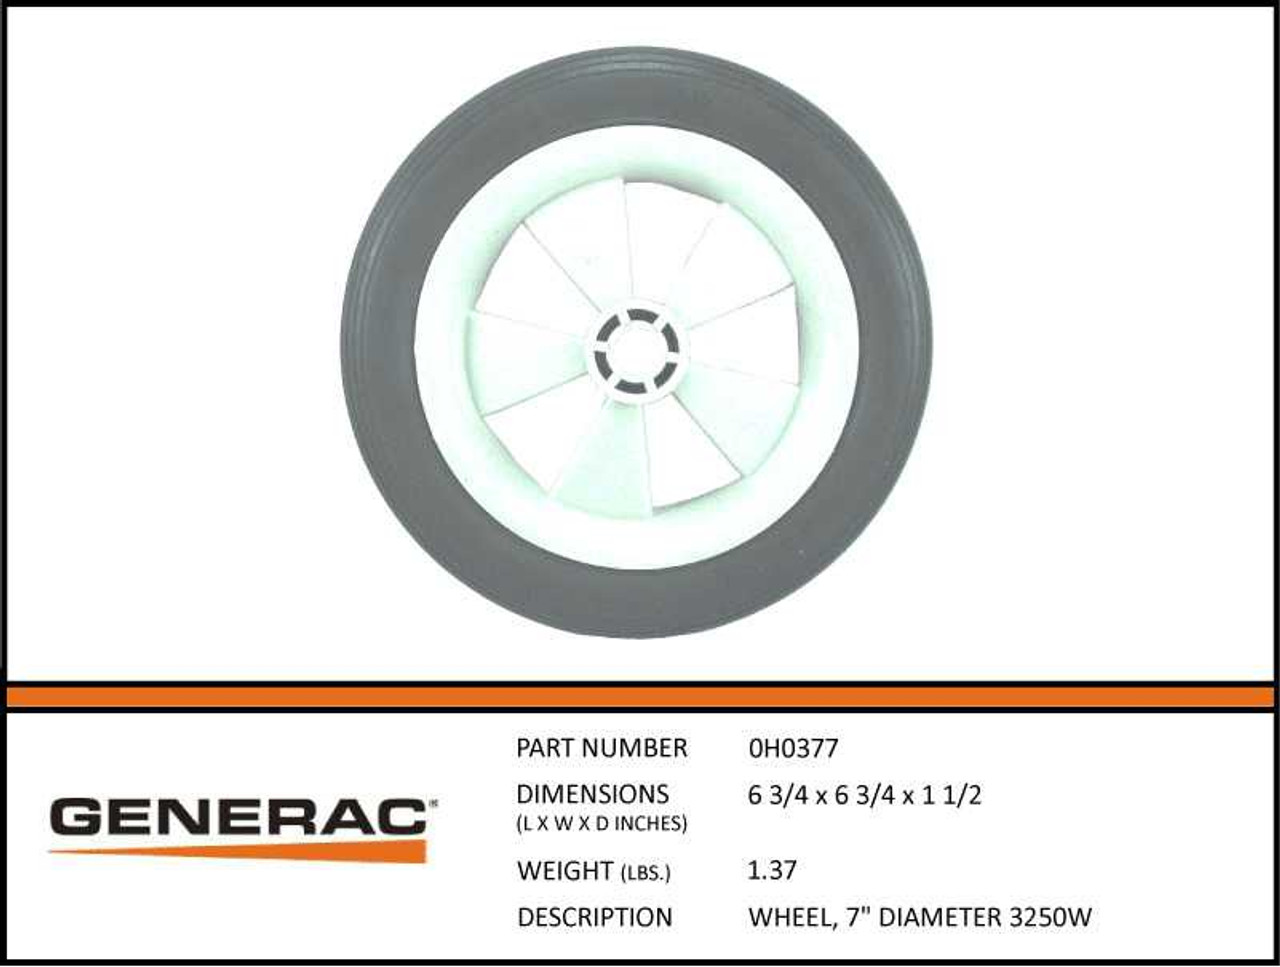 Generac 0H0377 7" Diameter 3250W Wheel